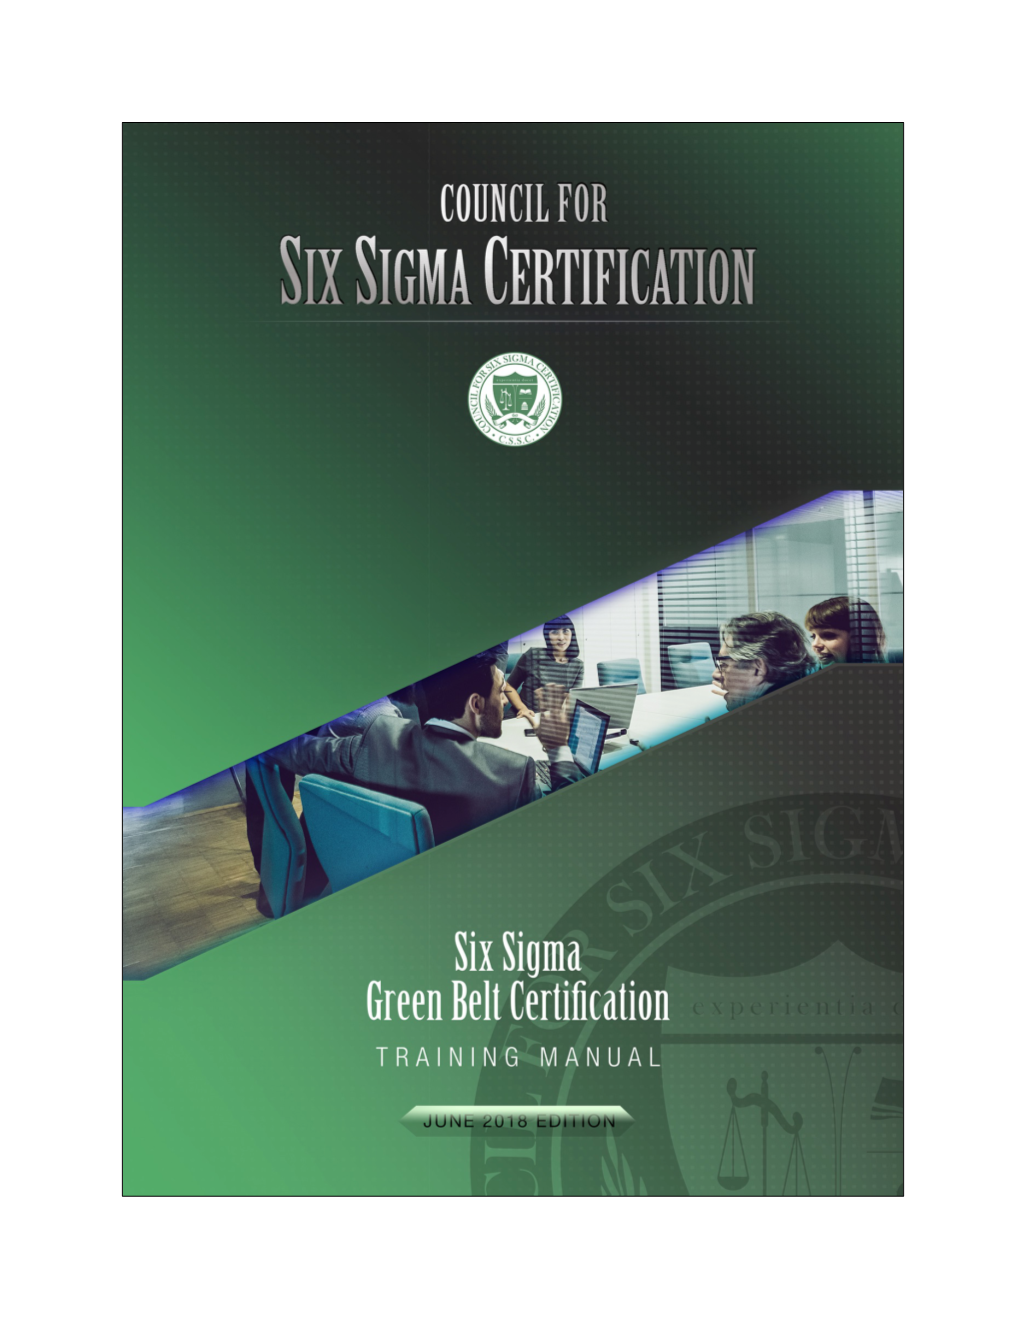 Six Sigma Green Belt Certification Training Manual